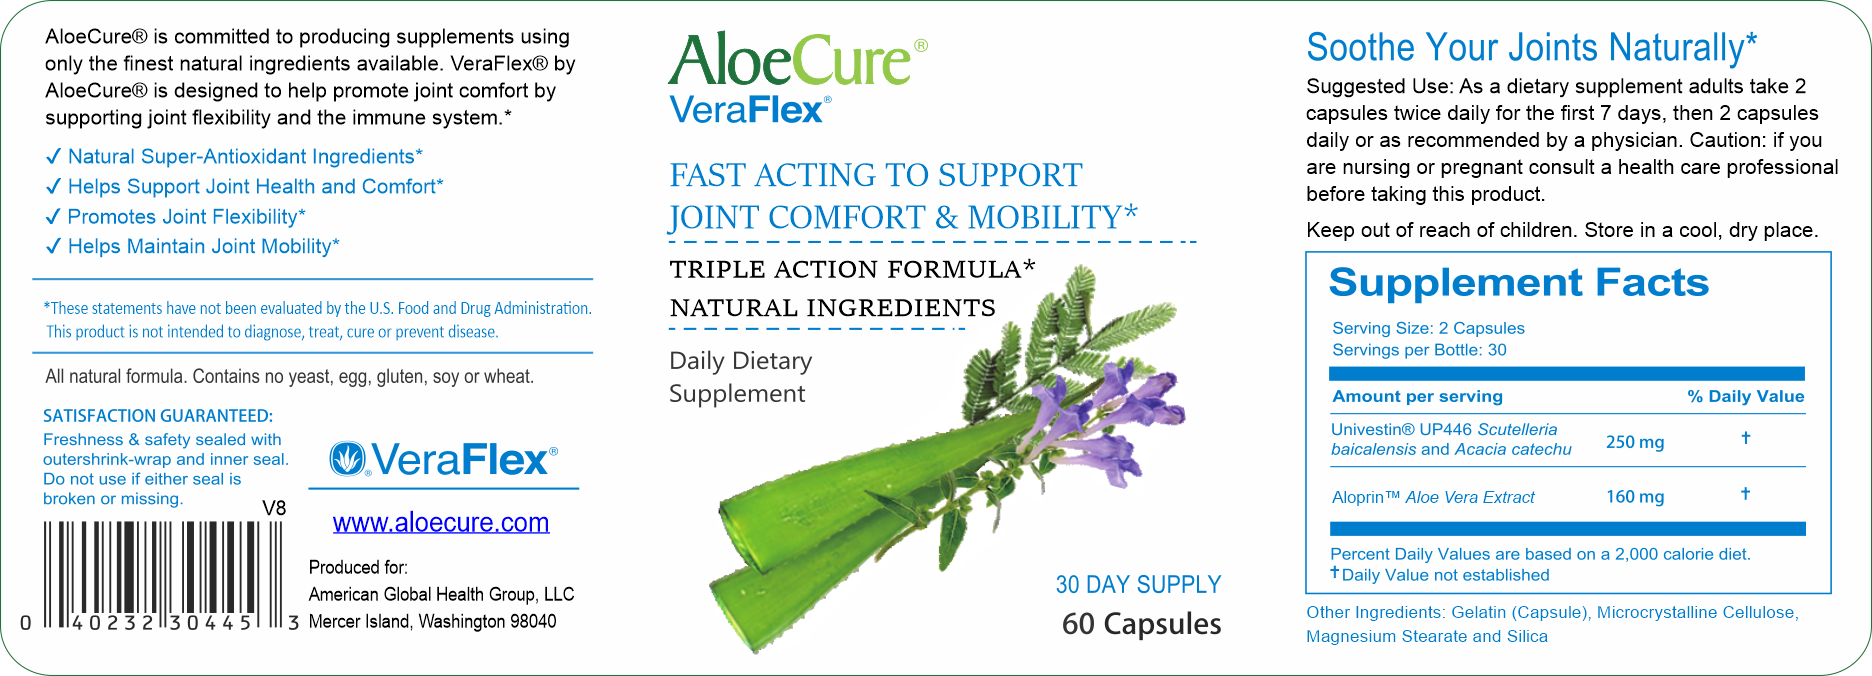 VeraFlex Healthy Joint Support